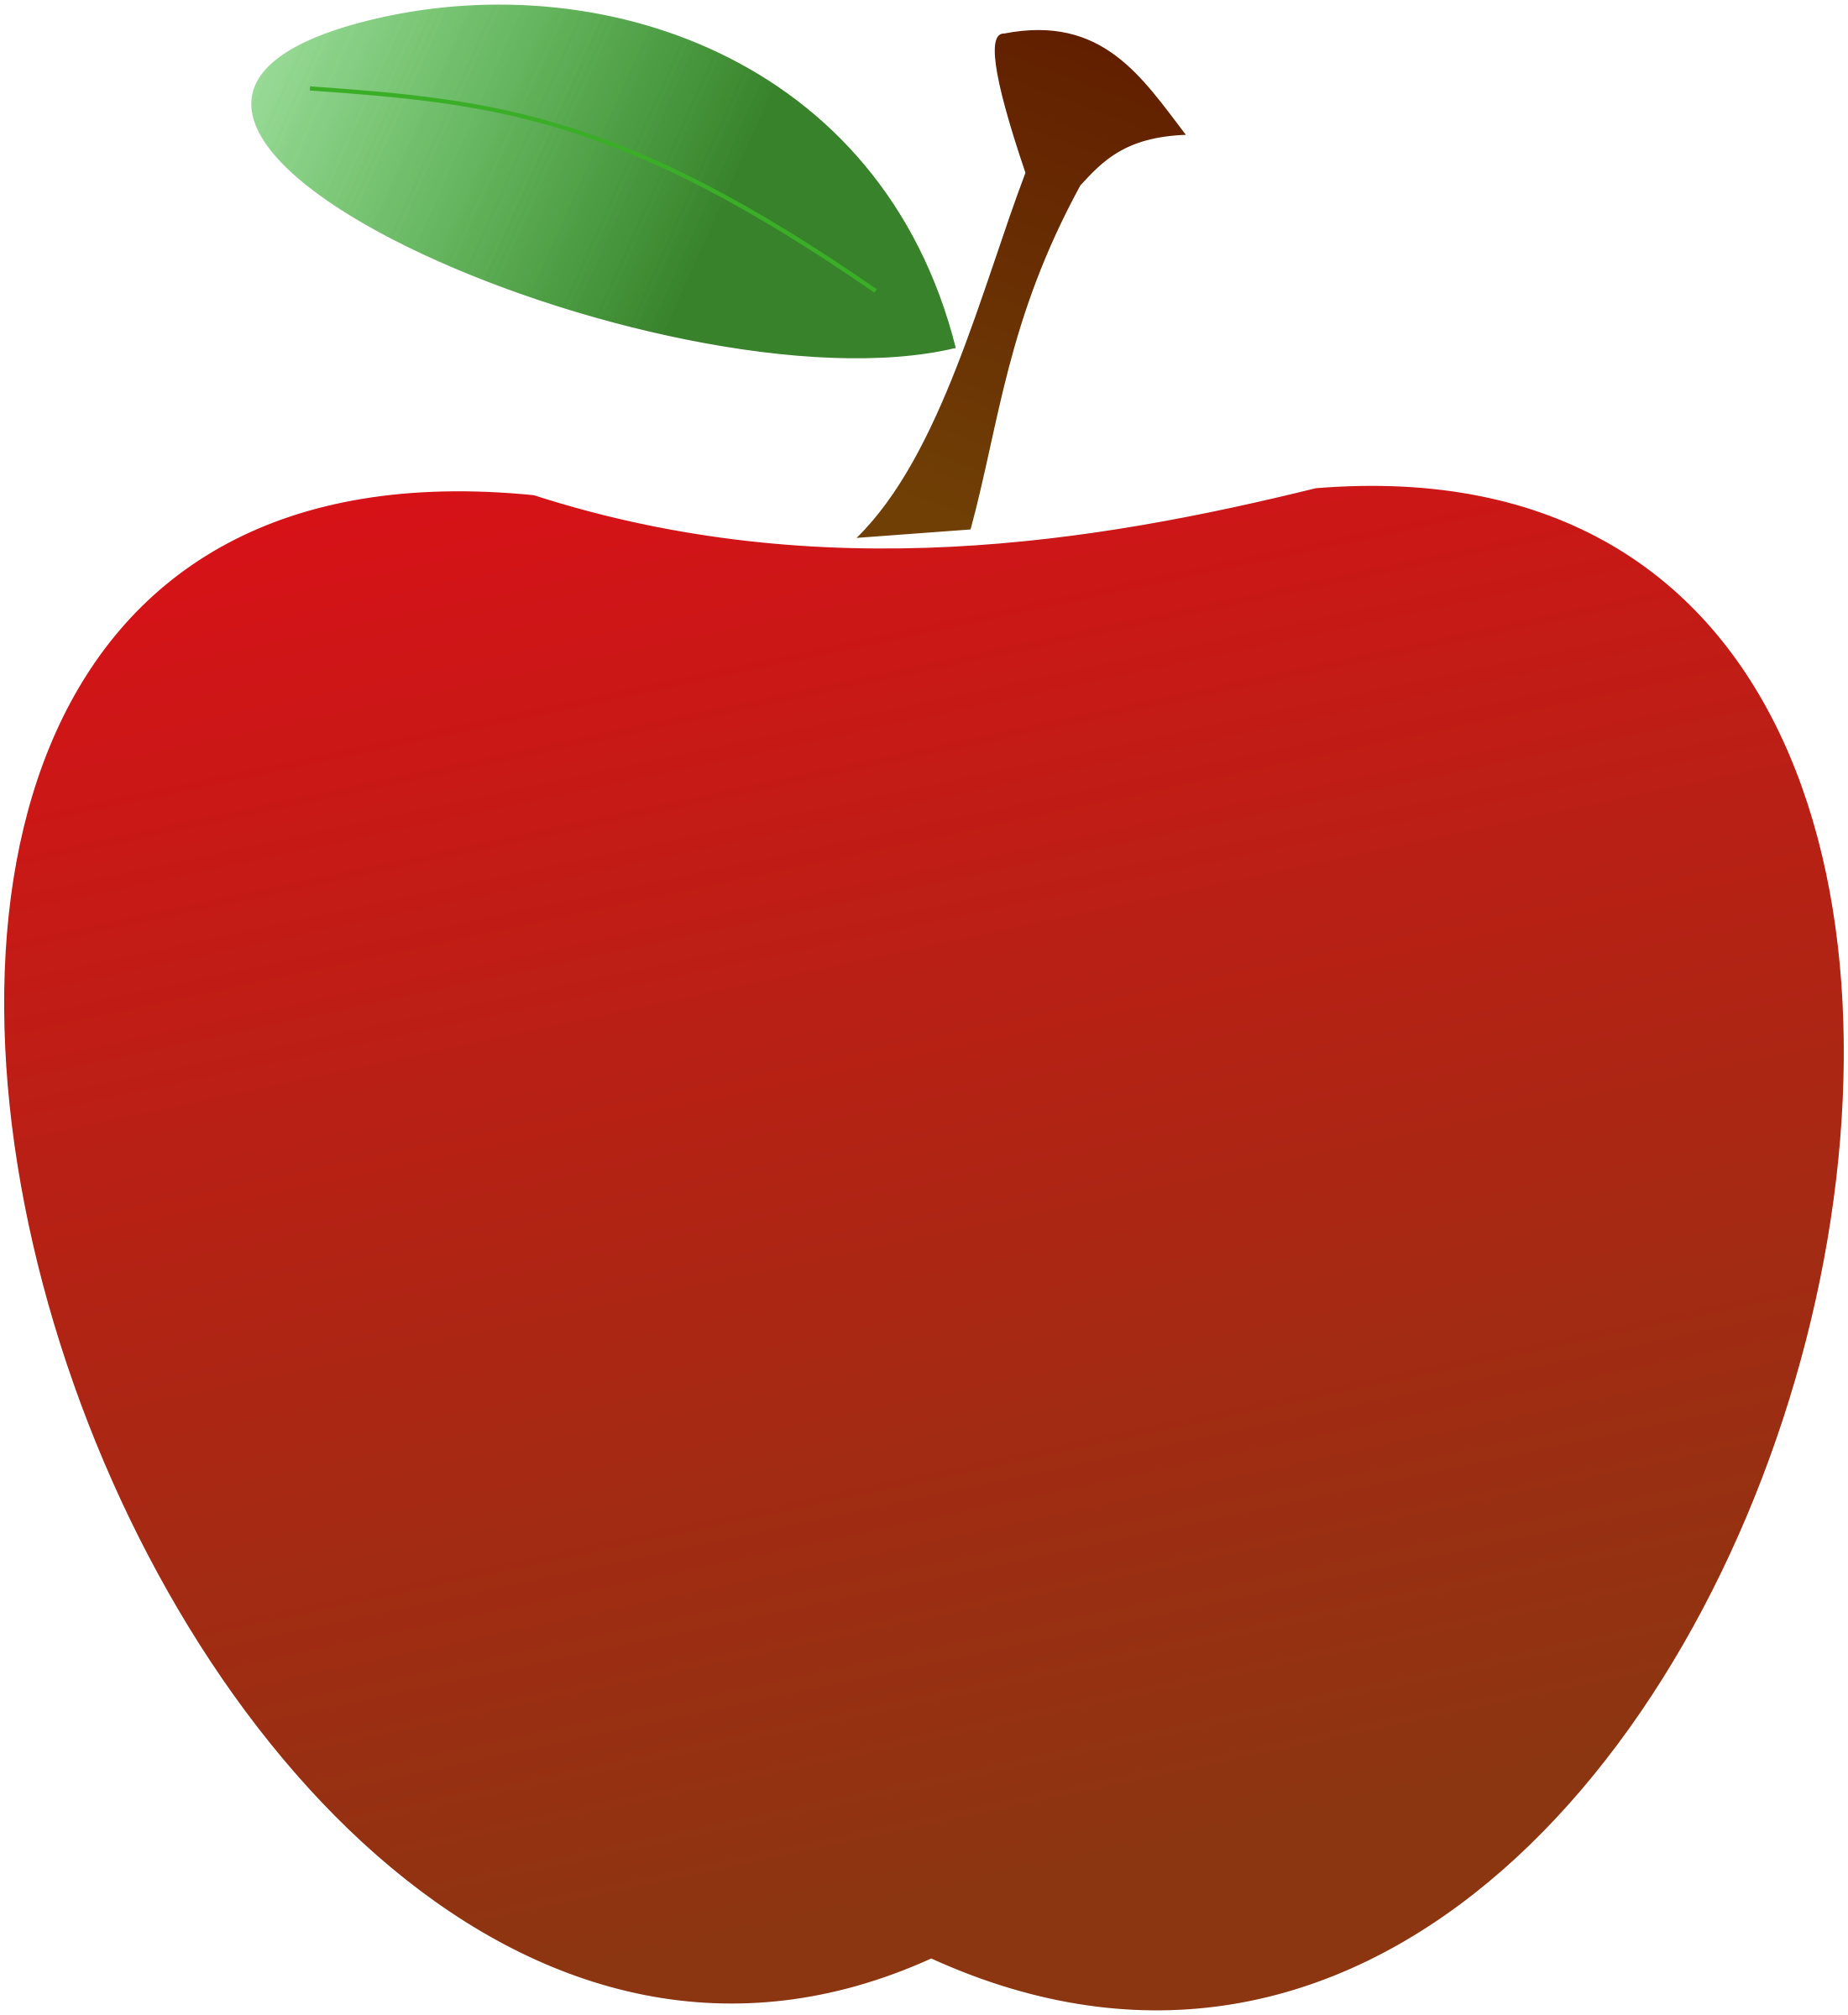 teacher apple school elementa